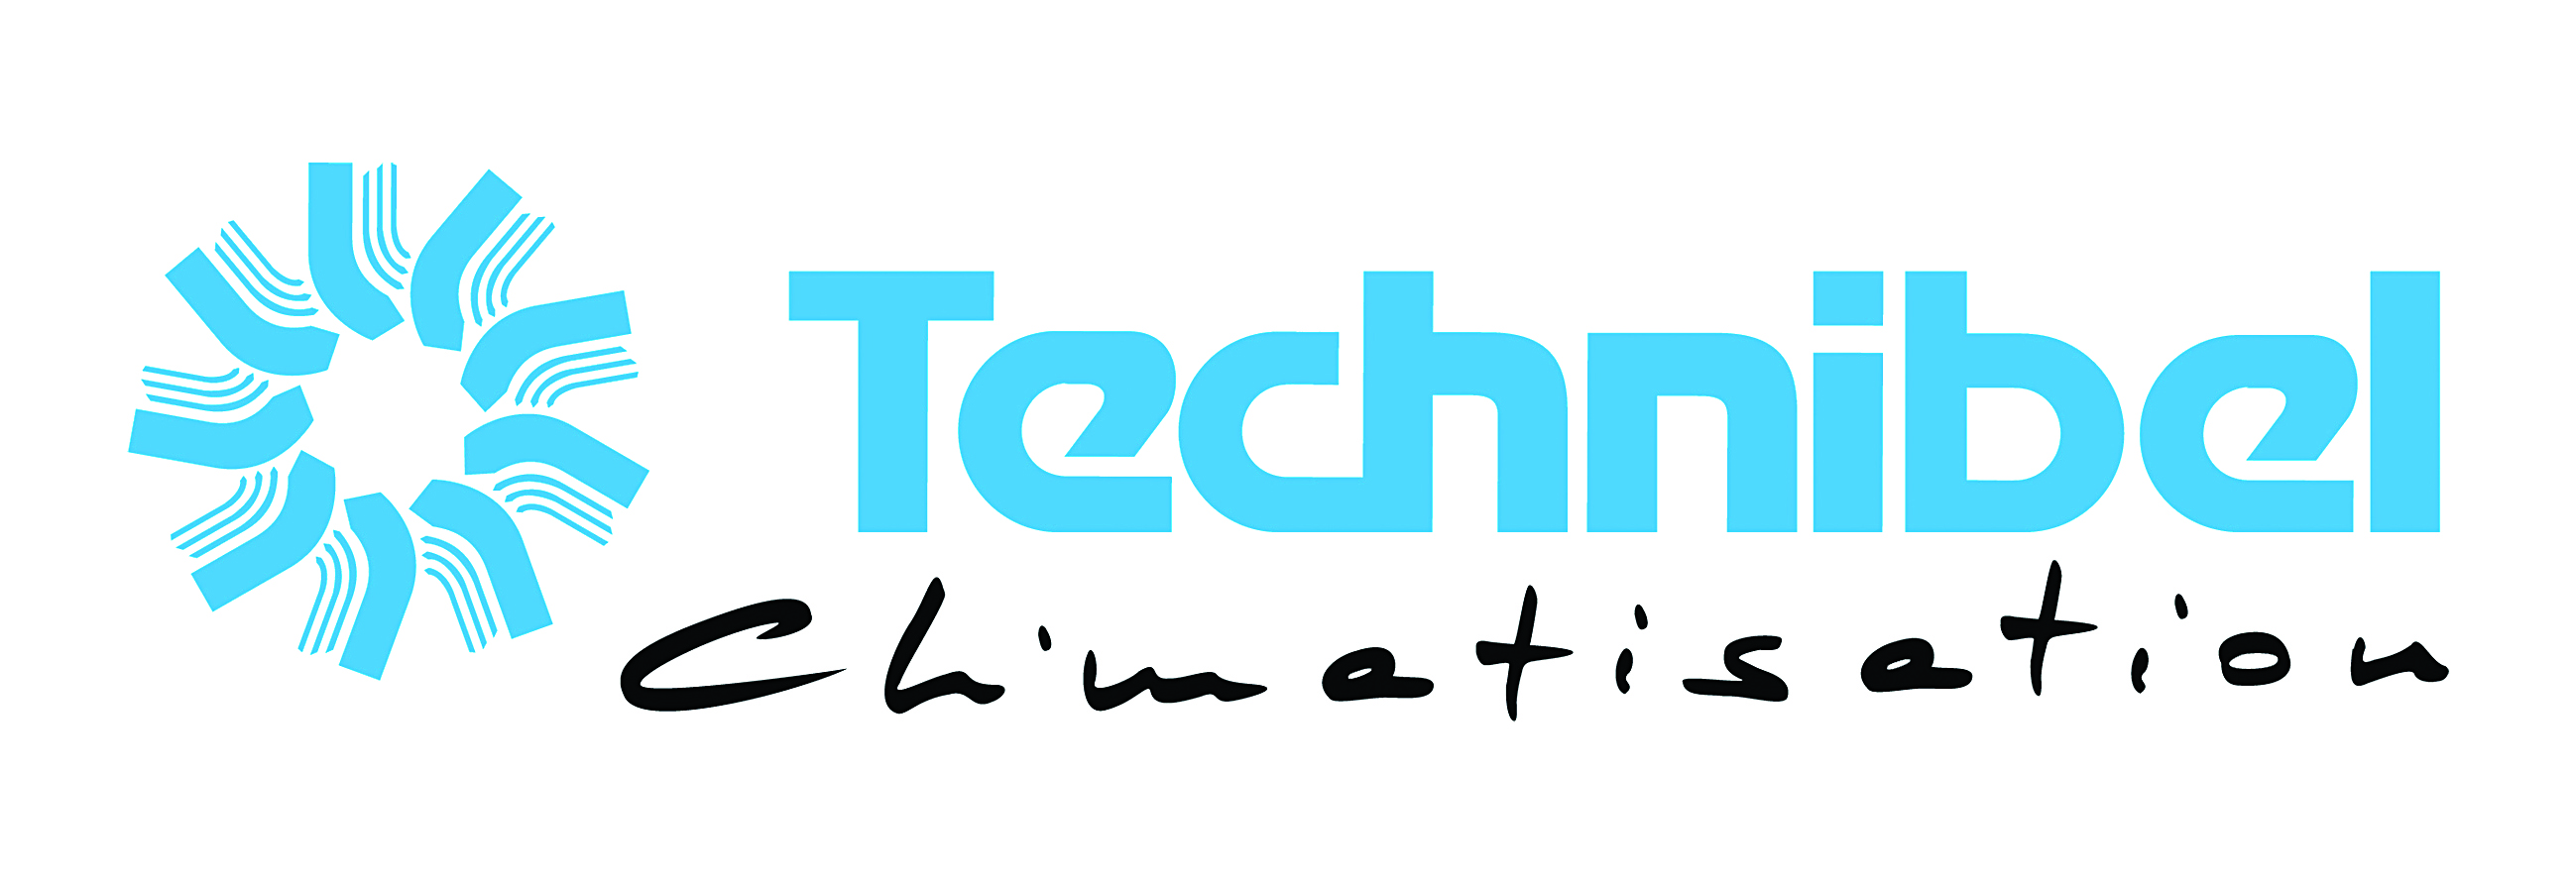 Technibel logo